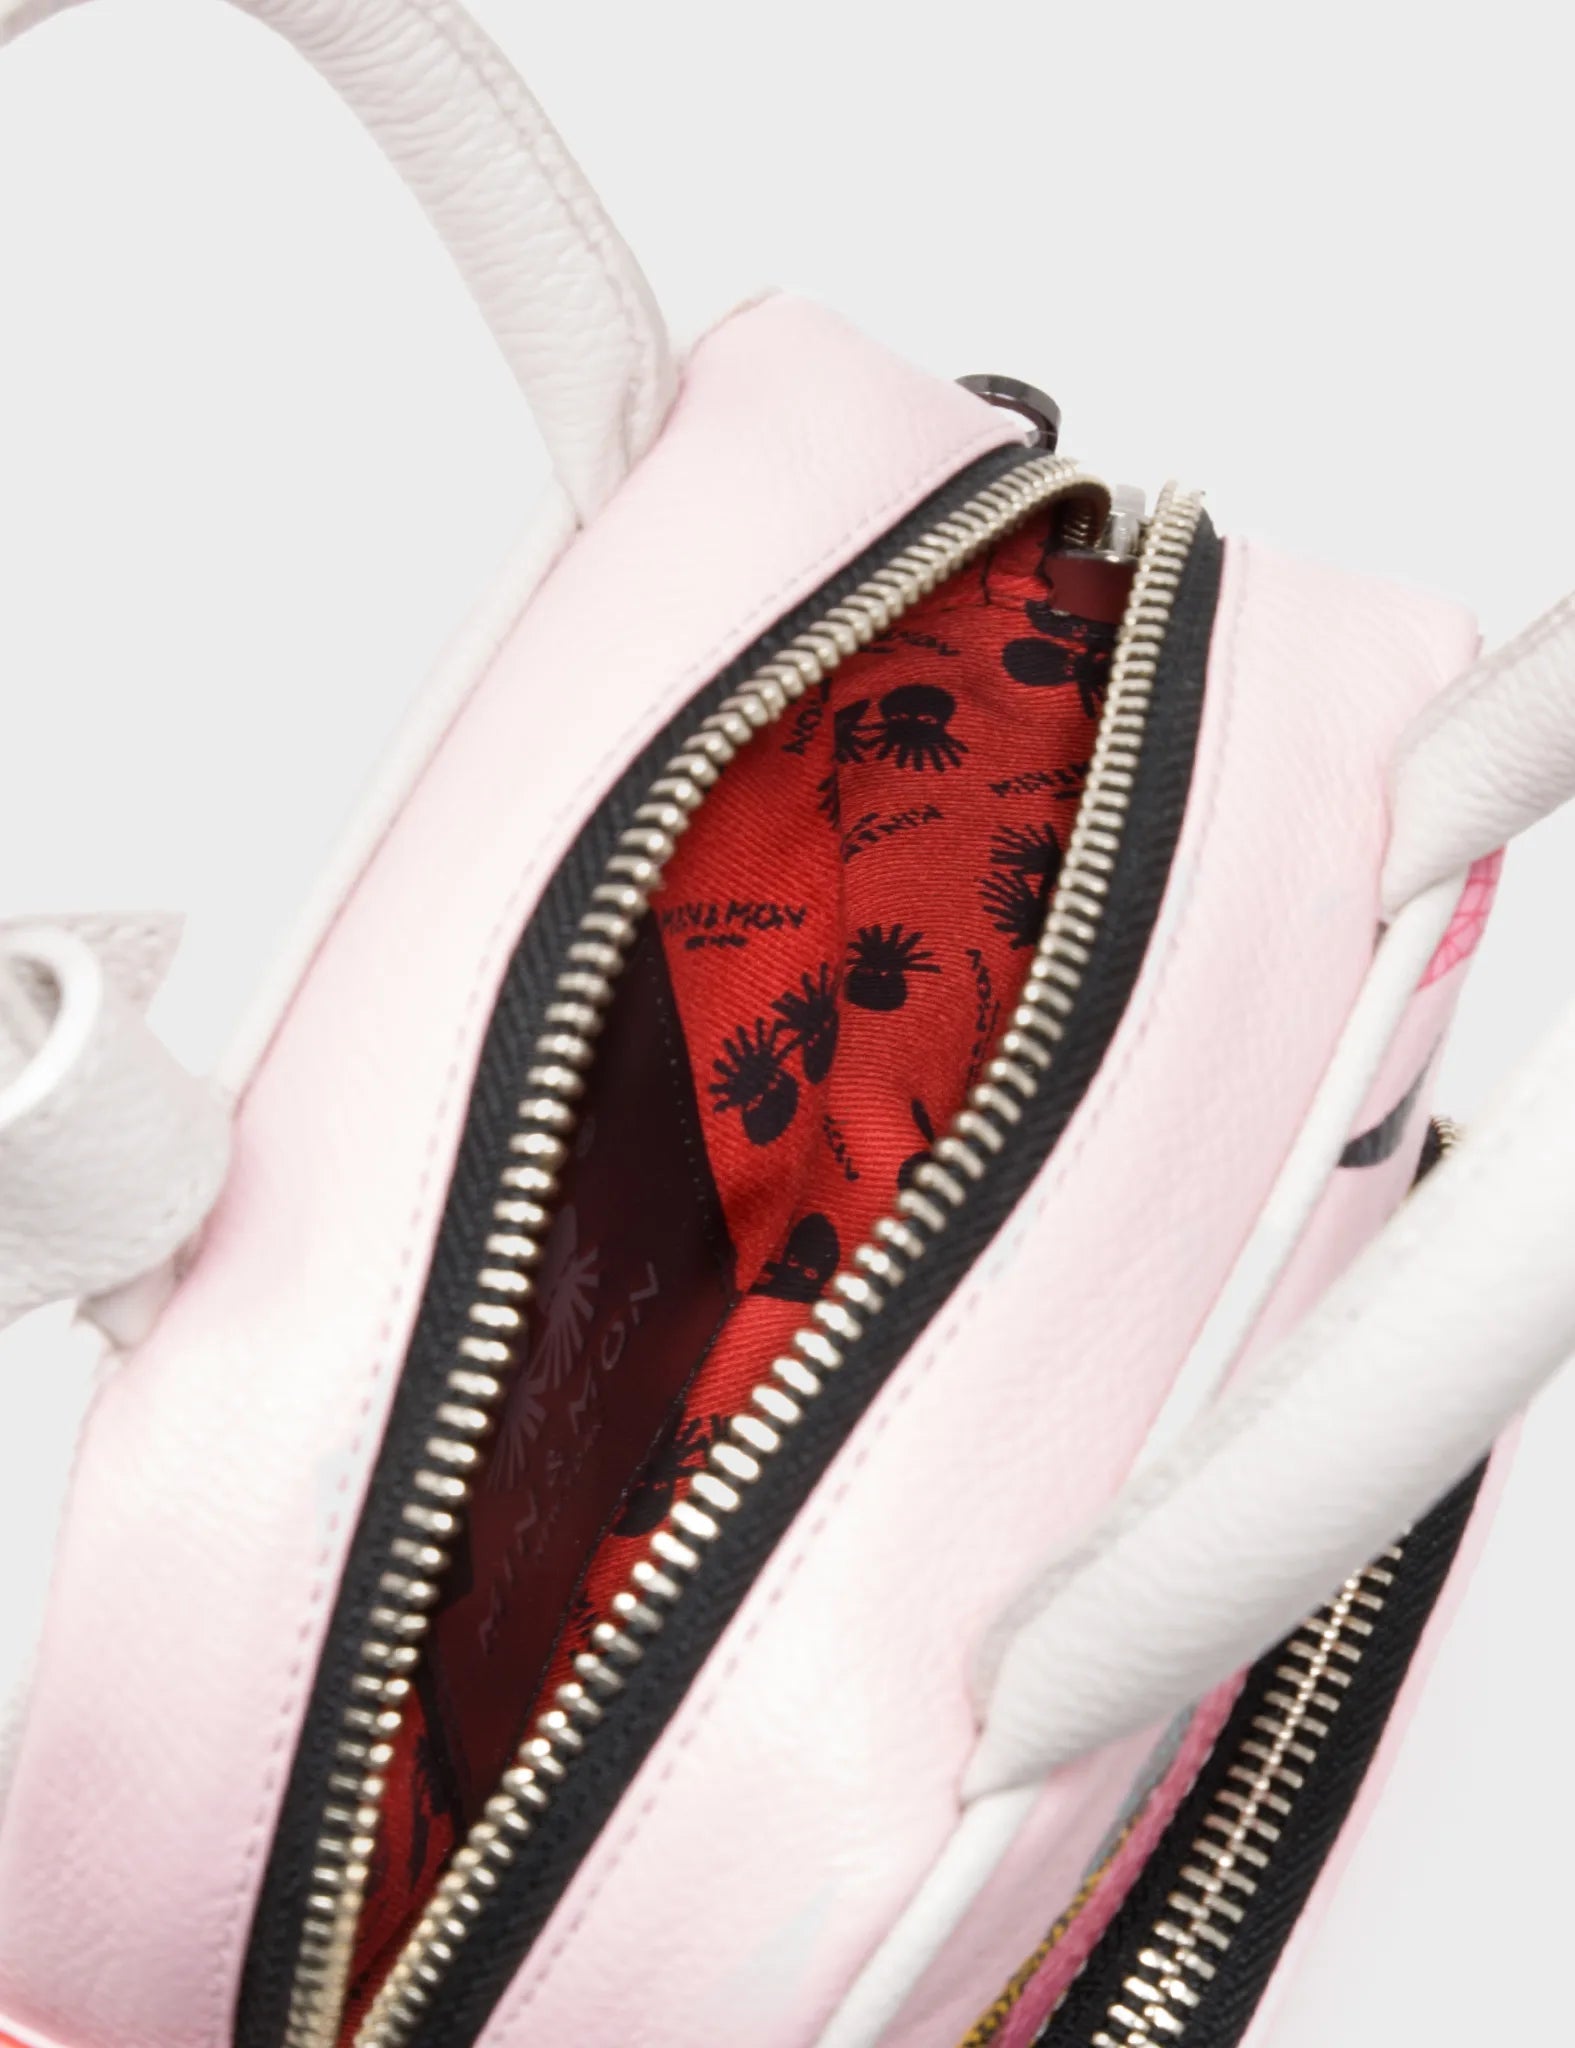 Small Crossbody Parfait Pink Leather Bag - Tangled Tiger & Snake Print Design - Inside